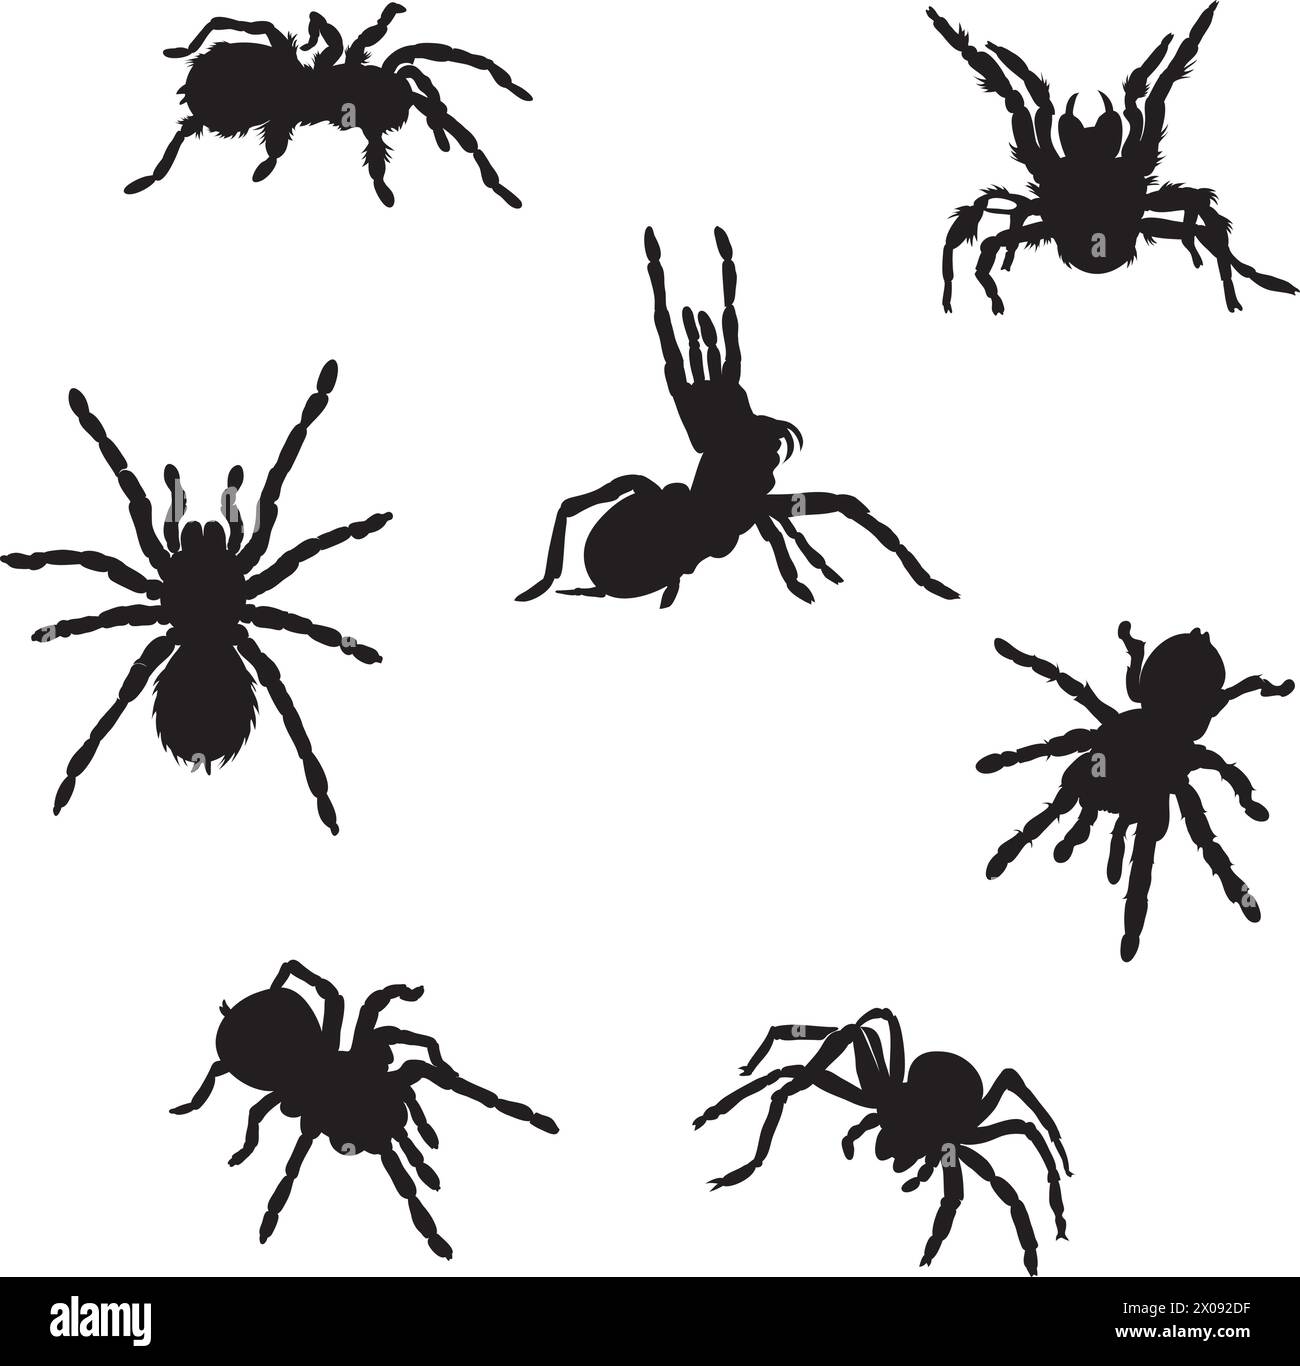 spider, tarantula, various images, vector, black silhouette Stock Vector